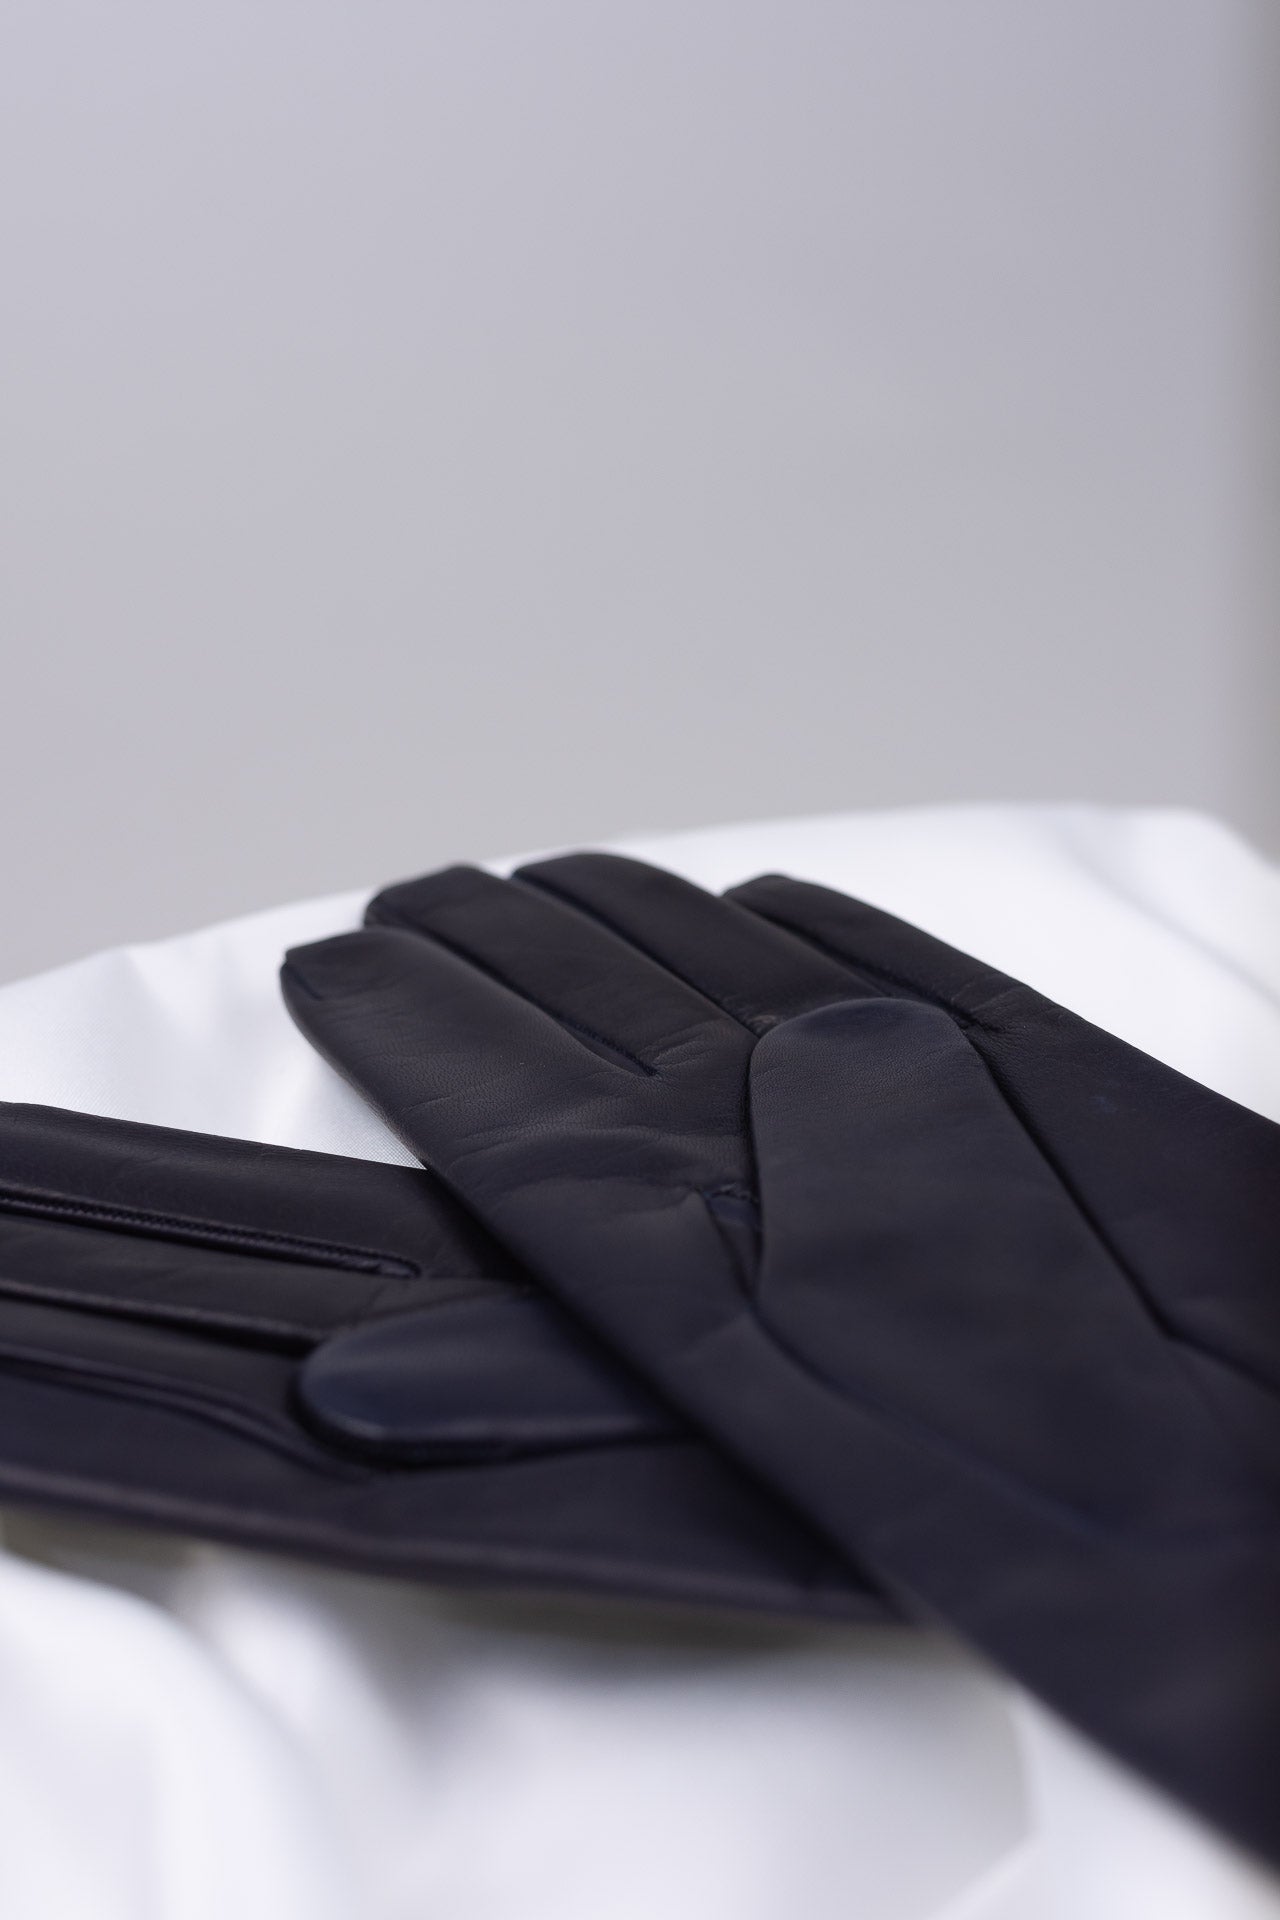 Dark blue leather gloves Elisabeth | ladies 